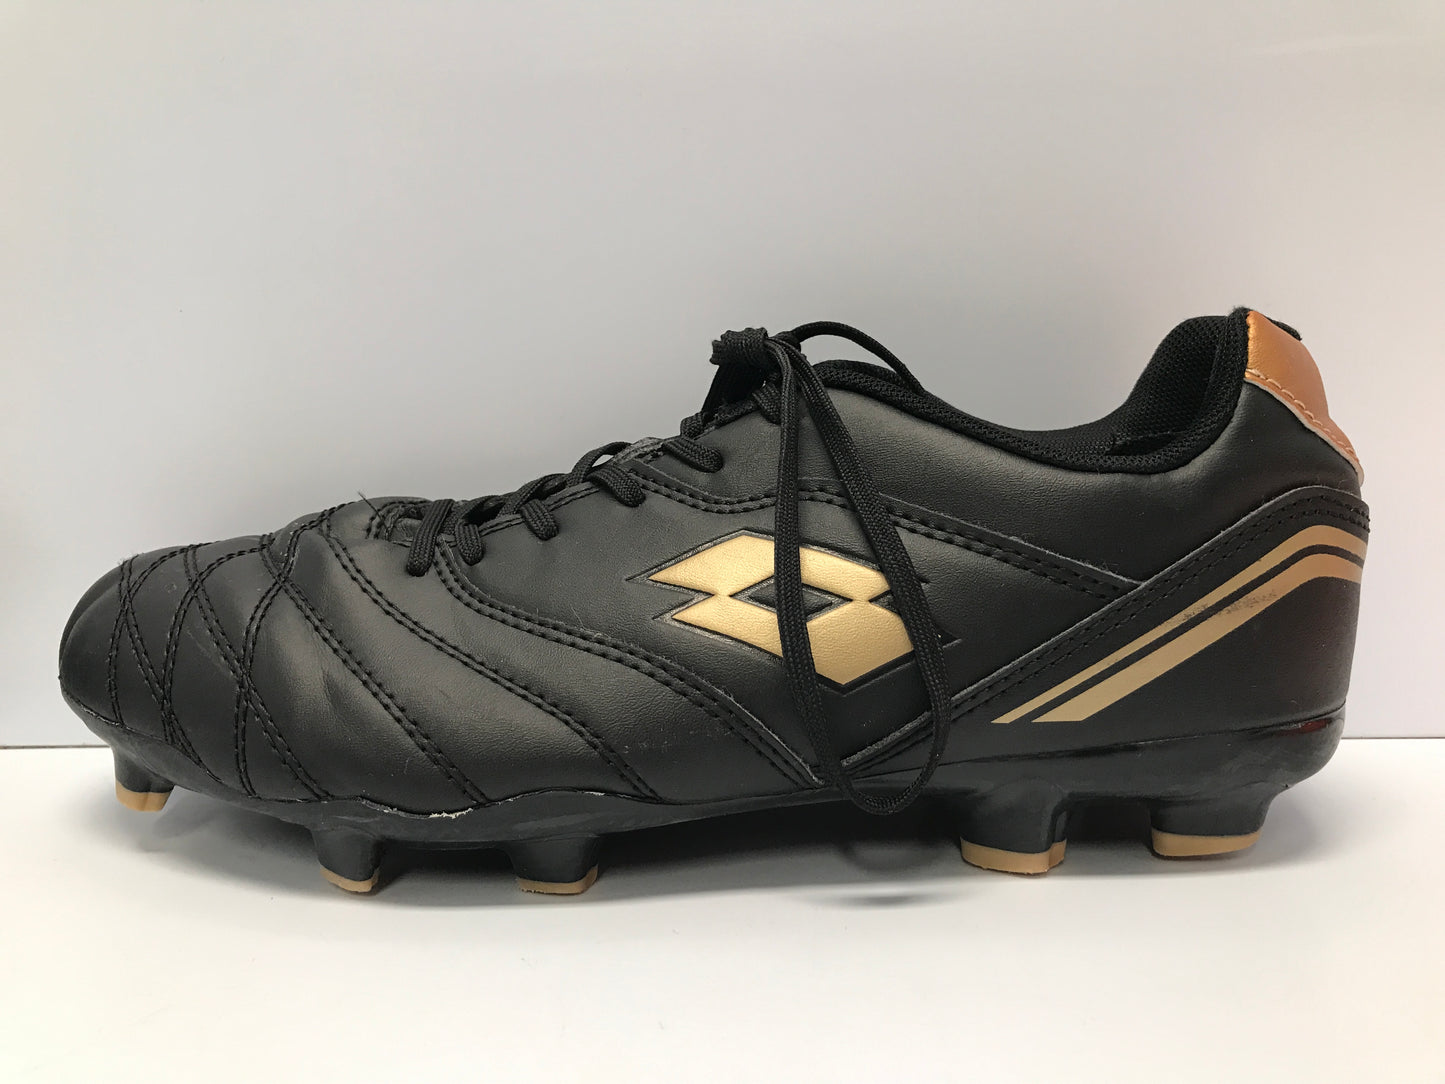 Soccer Shoes Cleats Men's Size 7.5 Lotto Black Gold Excellent